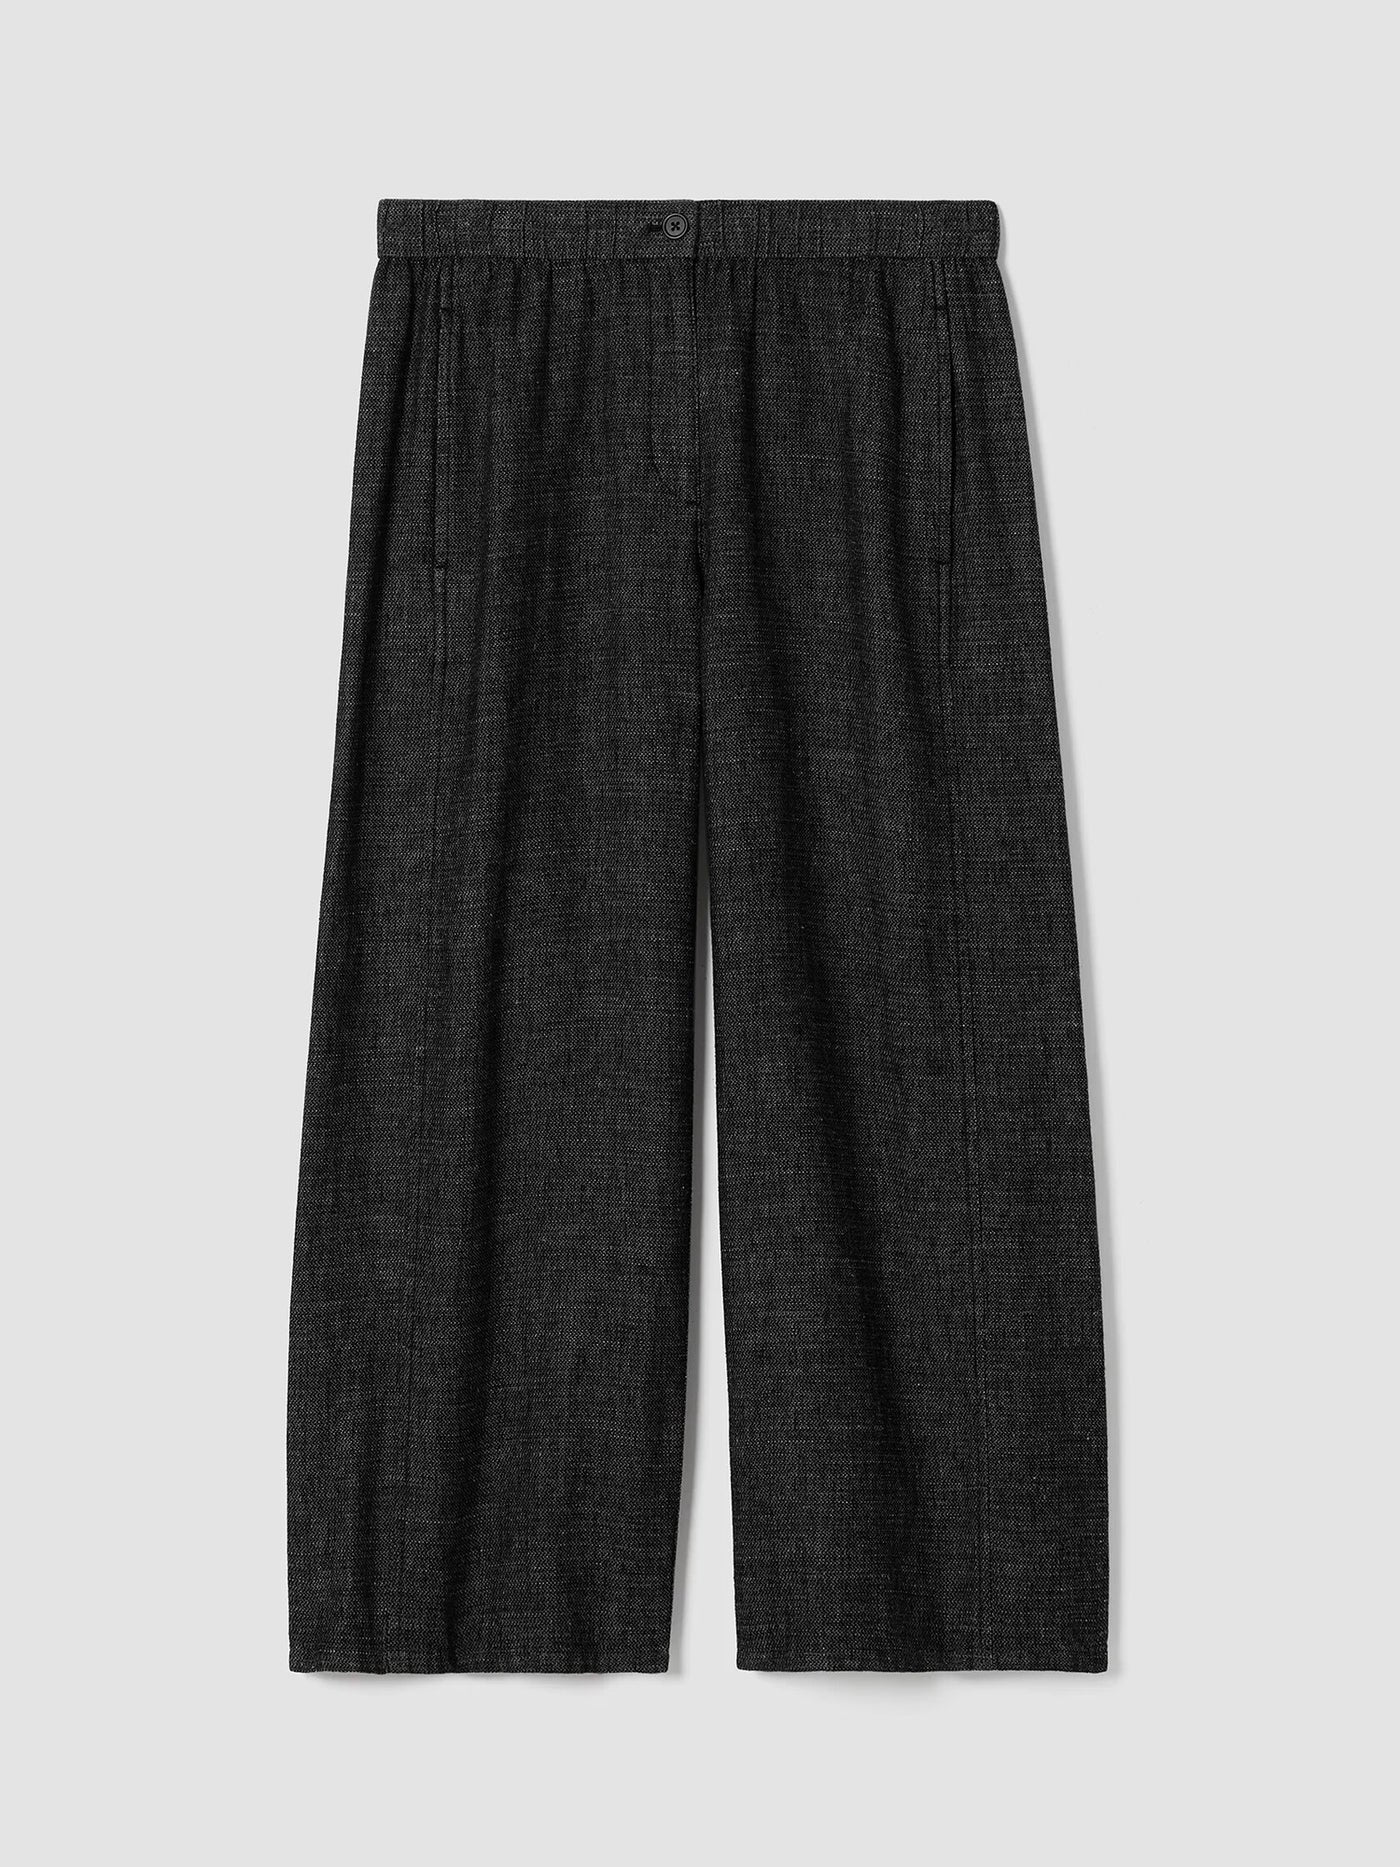 Eileen Fisher Tweedy Hemp/Cotton Wide ankle Pant in Black